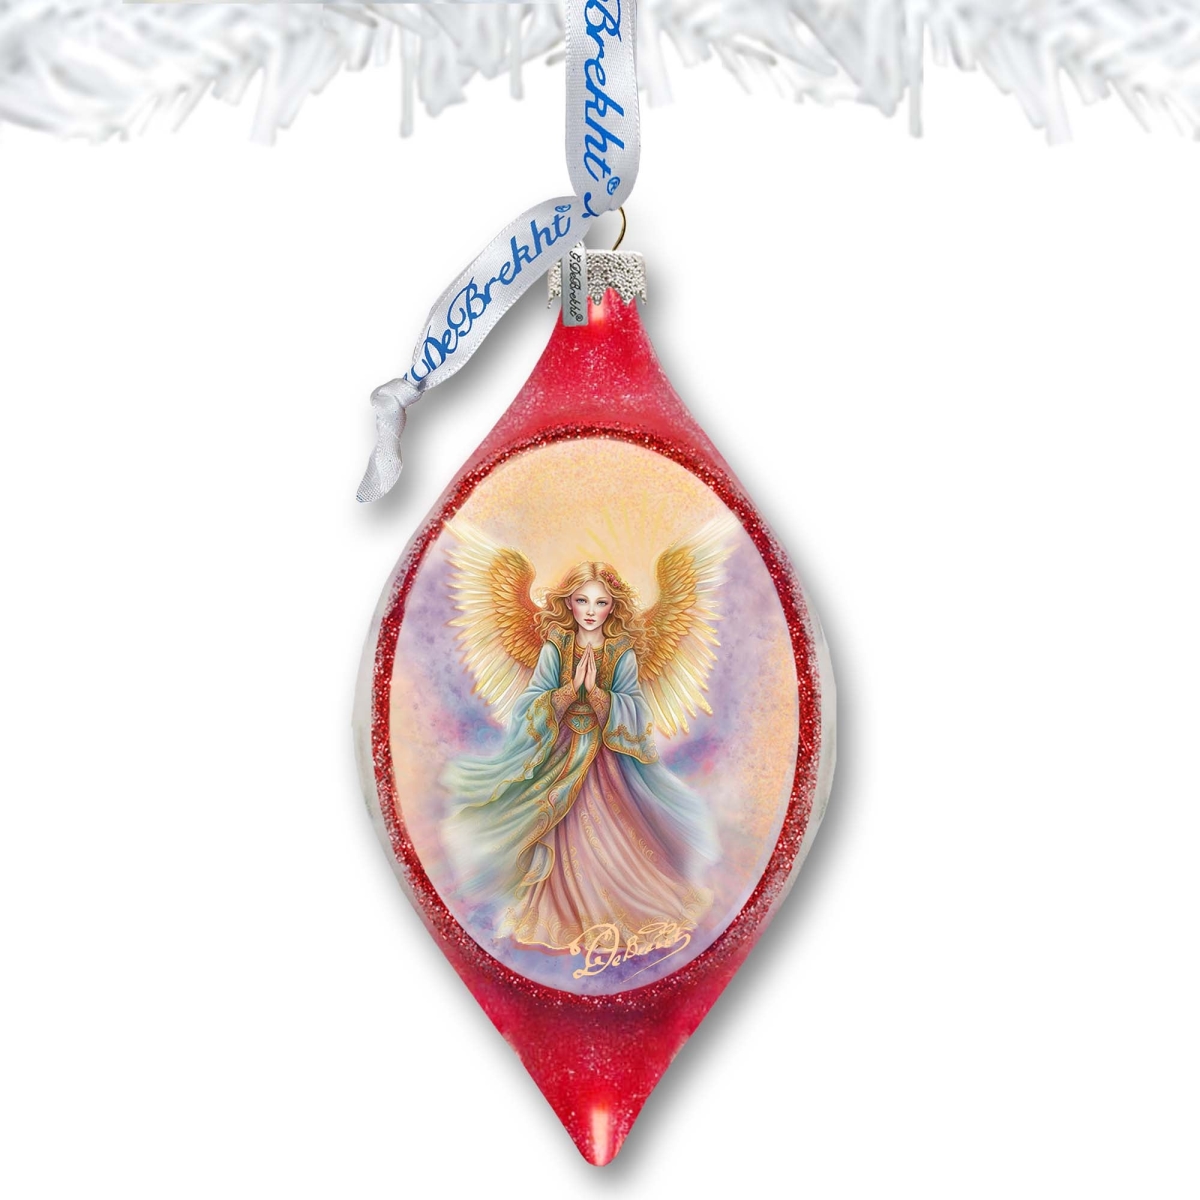 Designocracy 757-051 4 x 3 in. Angel Drop Glass Ornament Nativity Holiday Decor